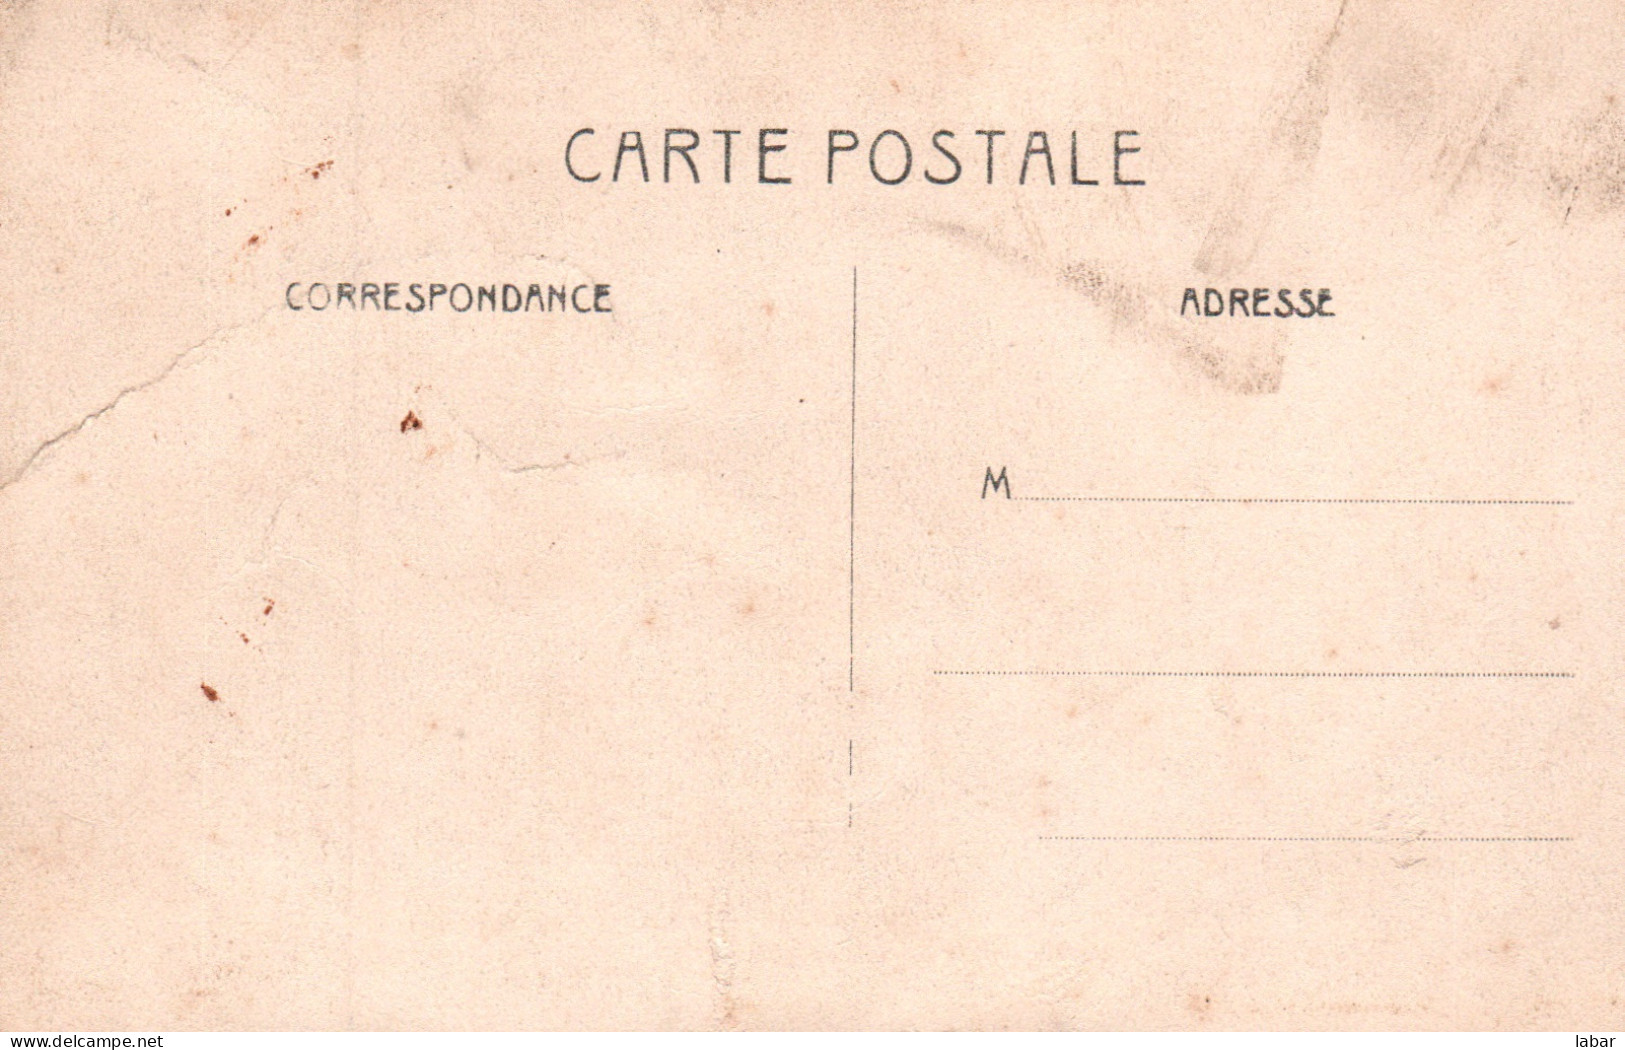 CPA CHATEAUPONSAC NOS ARTISTES VIVE JEANNE D'ARC SEPTEMBRE 1909 J B EDIT - Chateauponsac